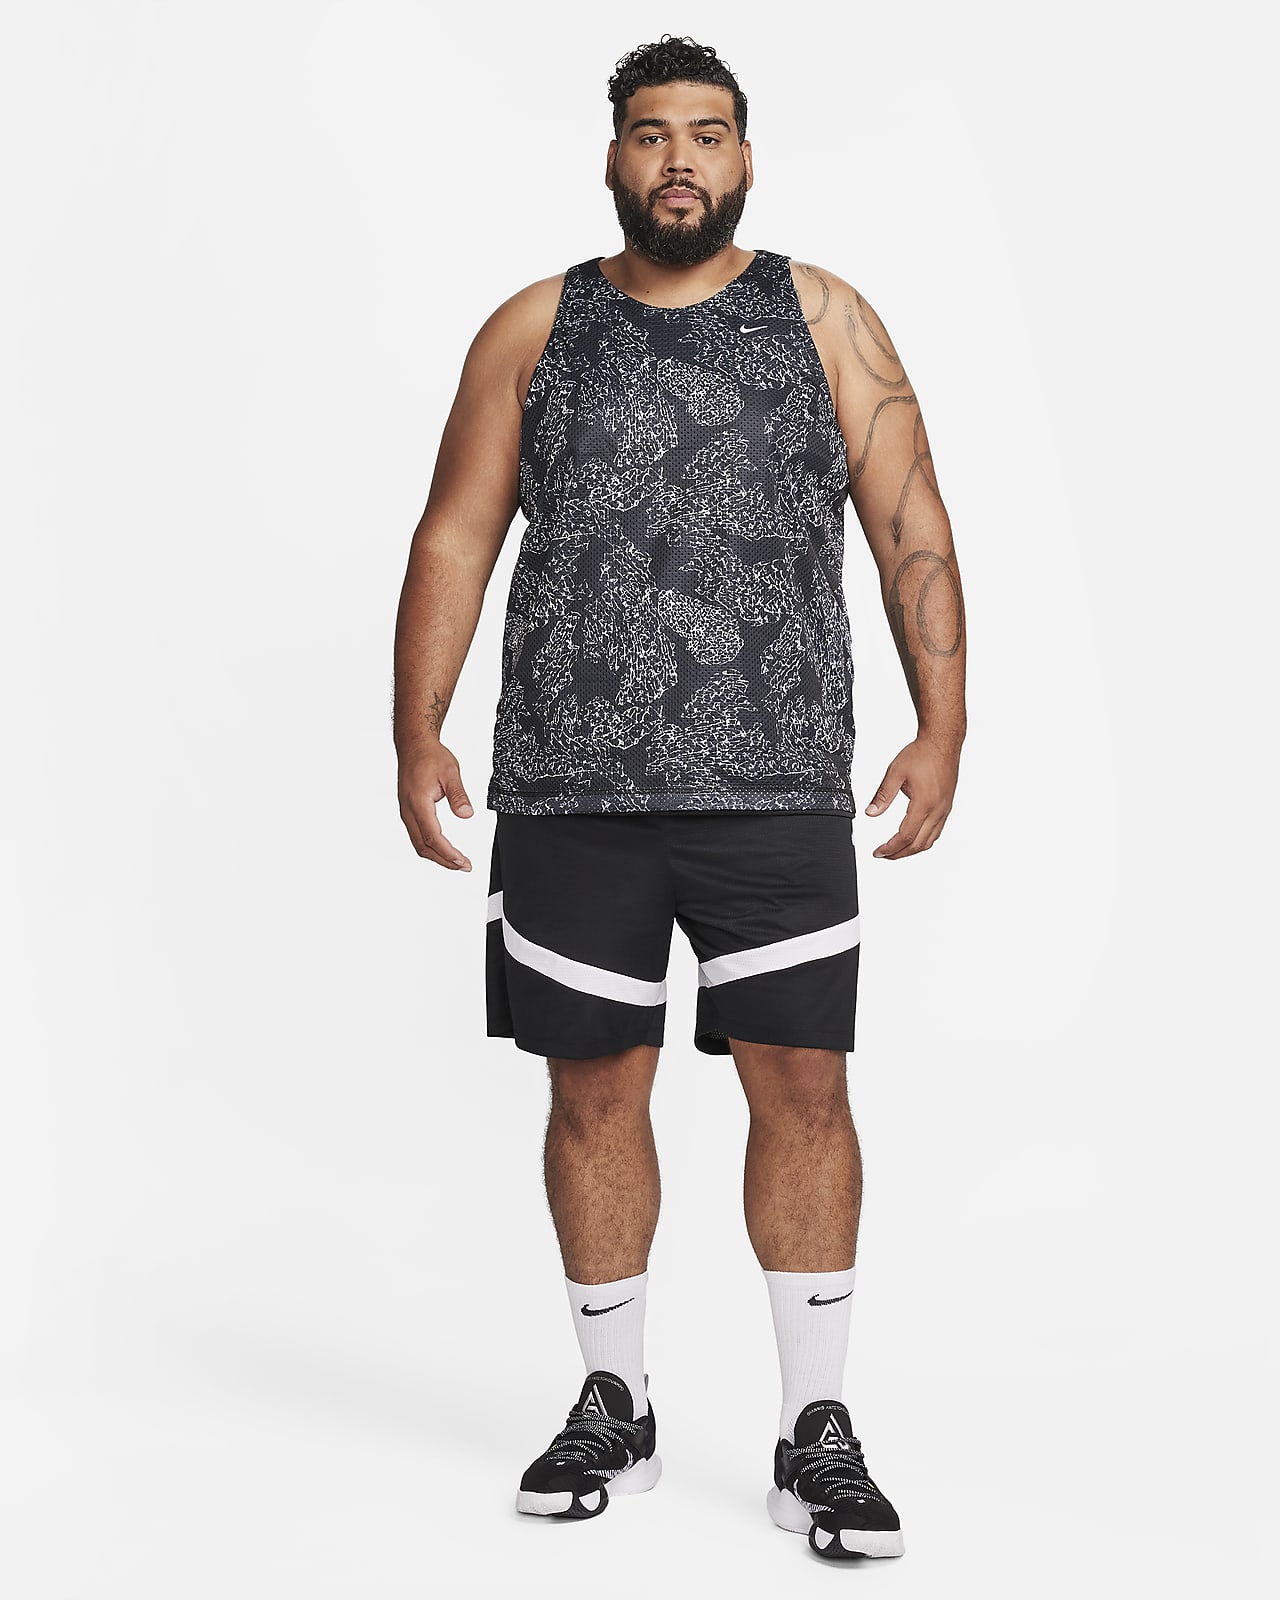 Nike Black/White Reversible Basketball Tank Top Training Jersey Boys Size  LG